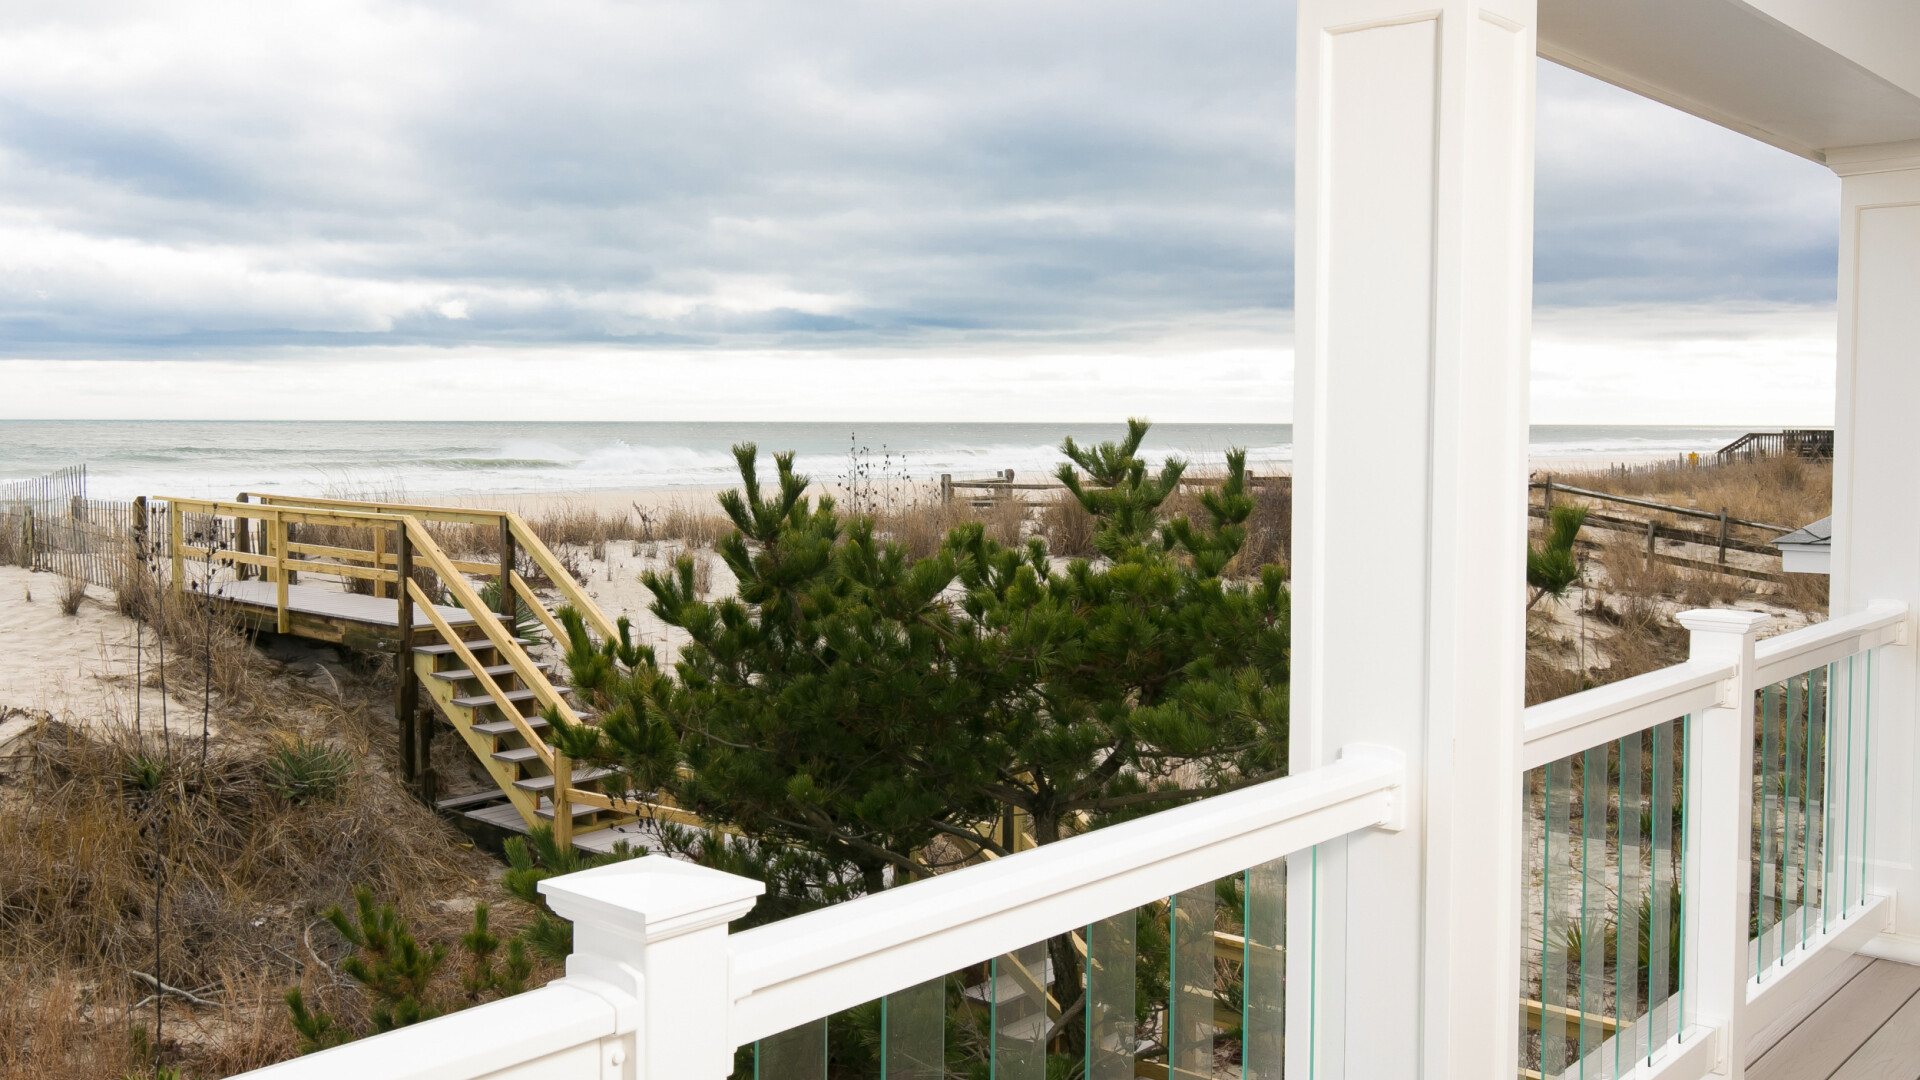 Private balcony view of beach and ocean, Long Beach Island NJ